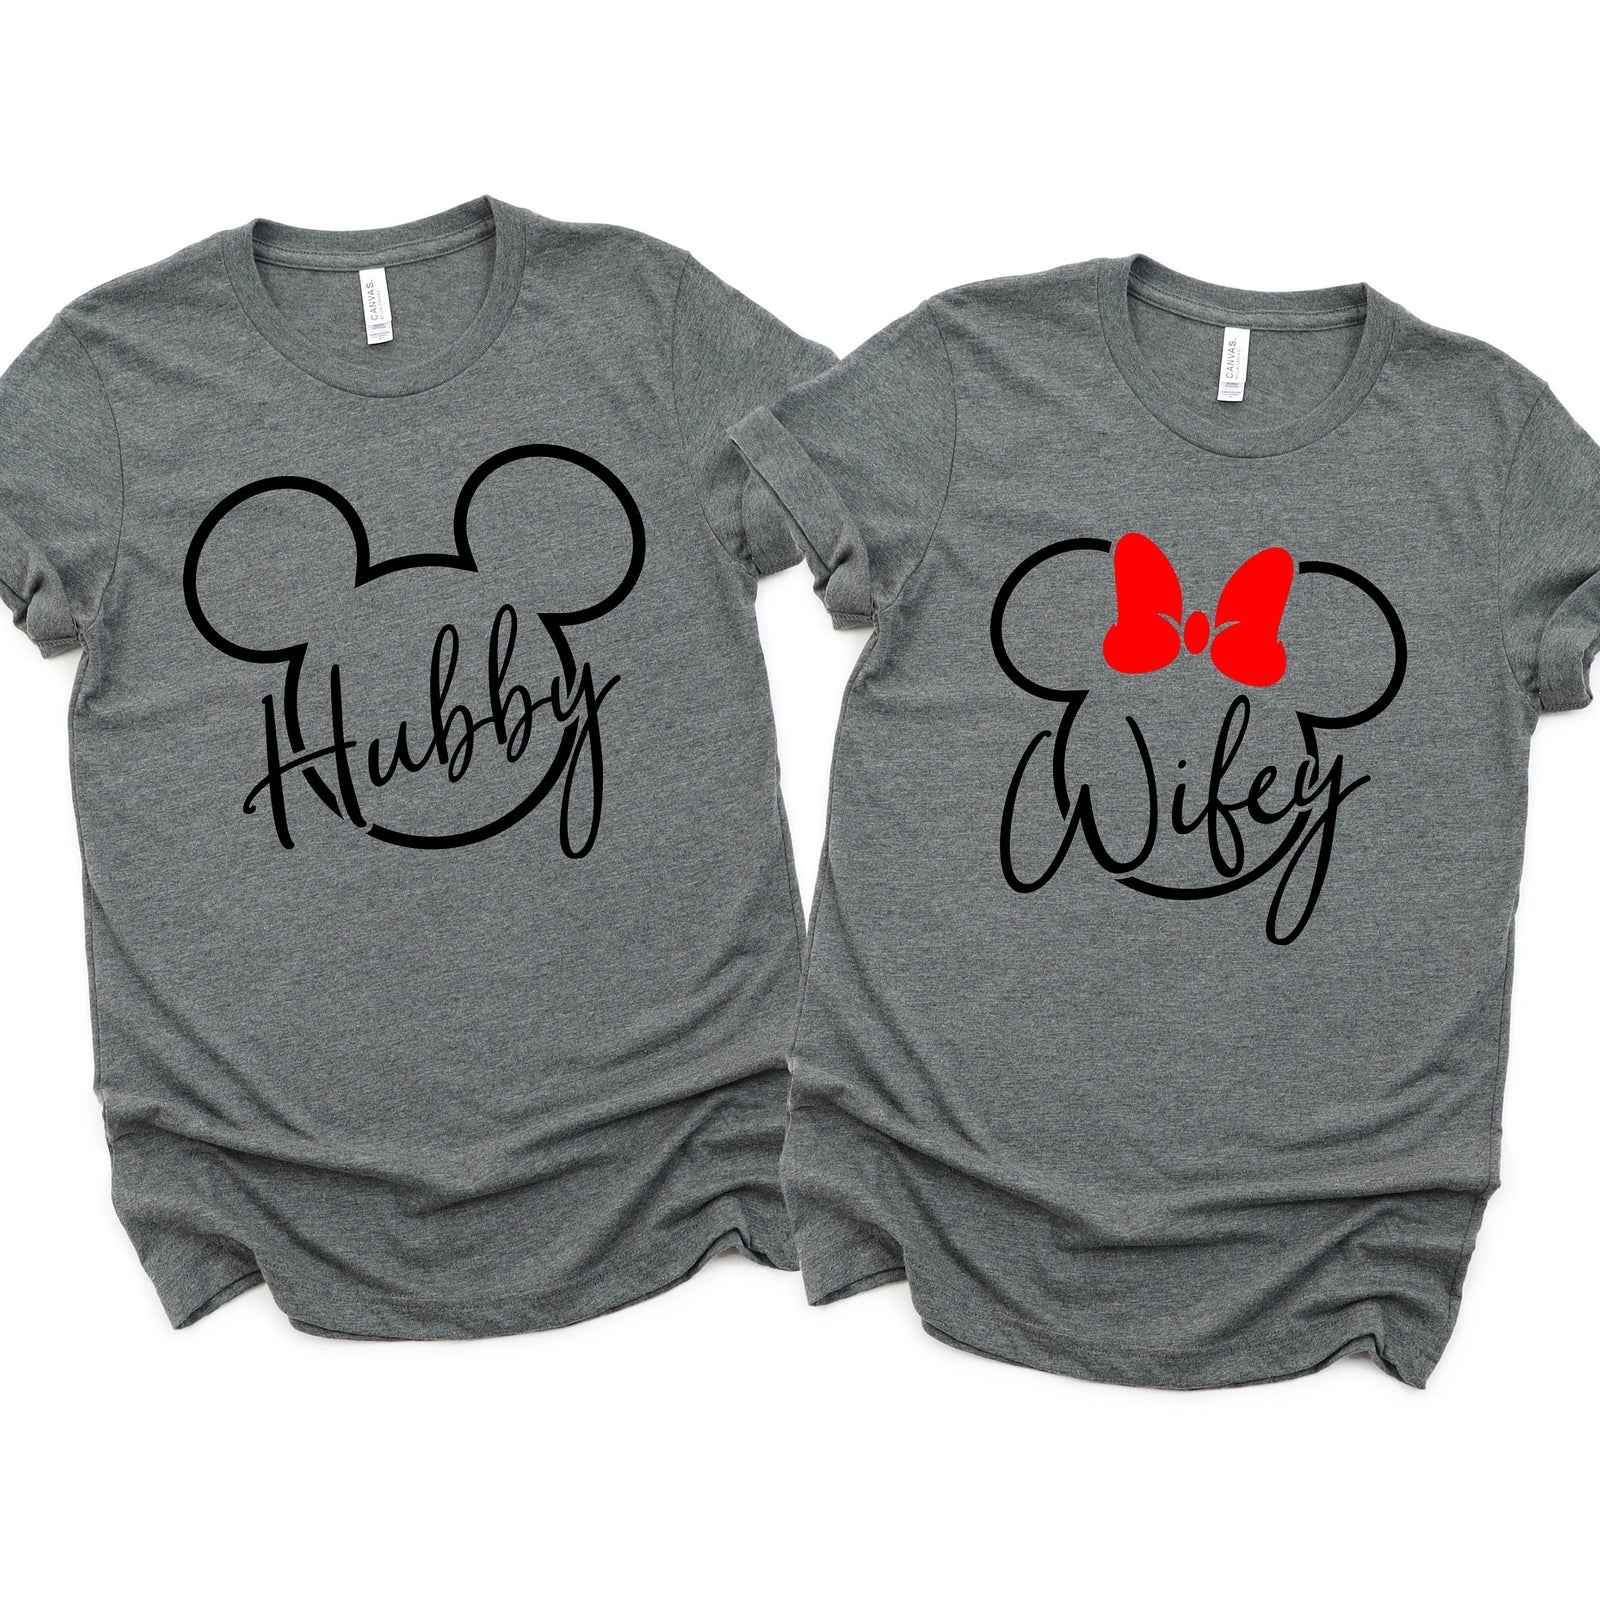 Hubby and Wifey Disney Couples Matching Unisex T Shirts - Mickey and Minnie - Anniversary - Disneymoon - Honeymoon